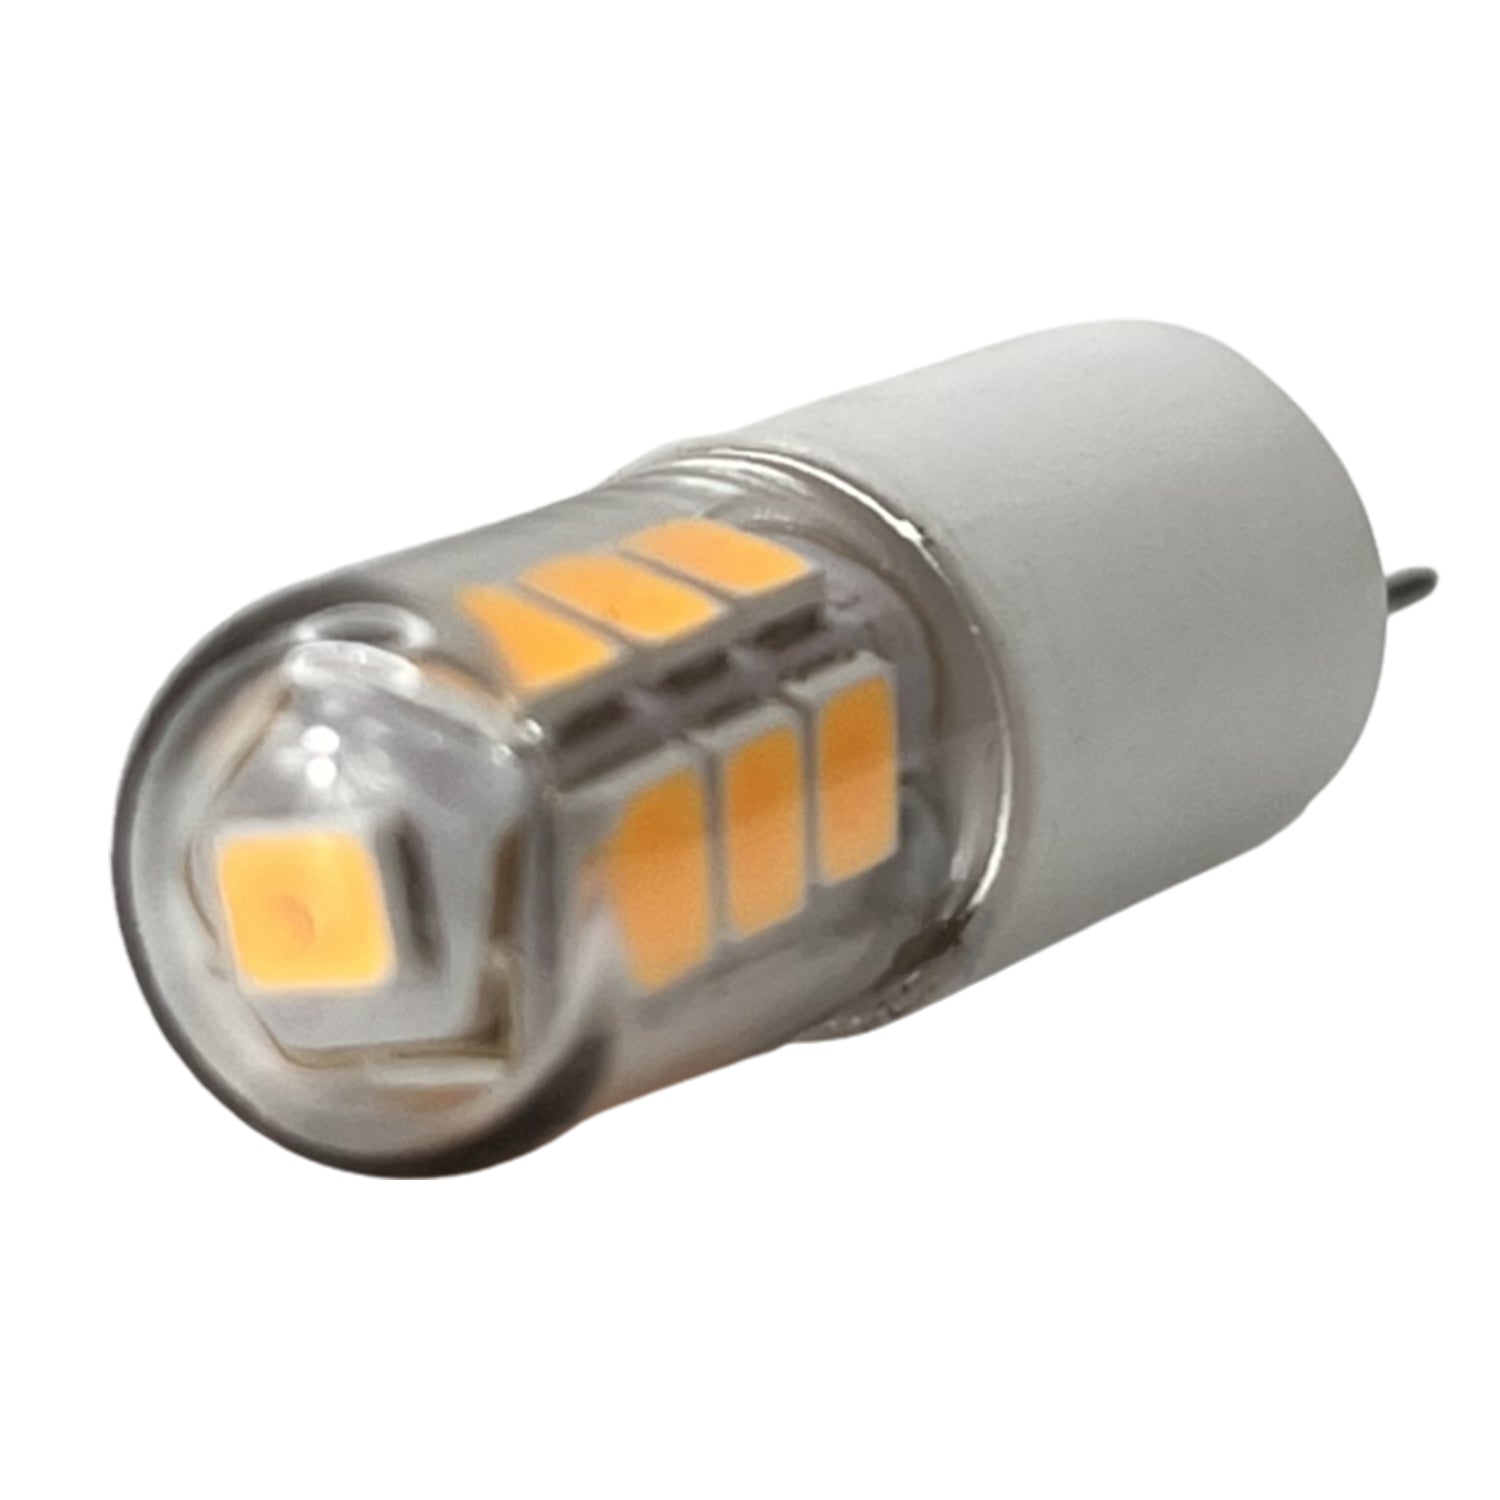 LED bulb 2W - G4 / SMD / 4000K / DIM - ZLS422CD